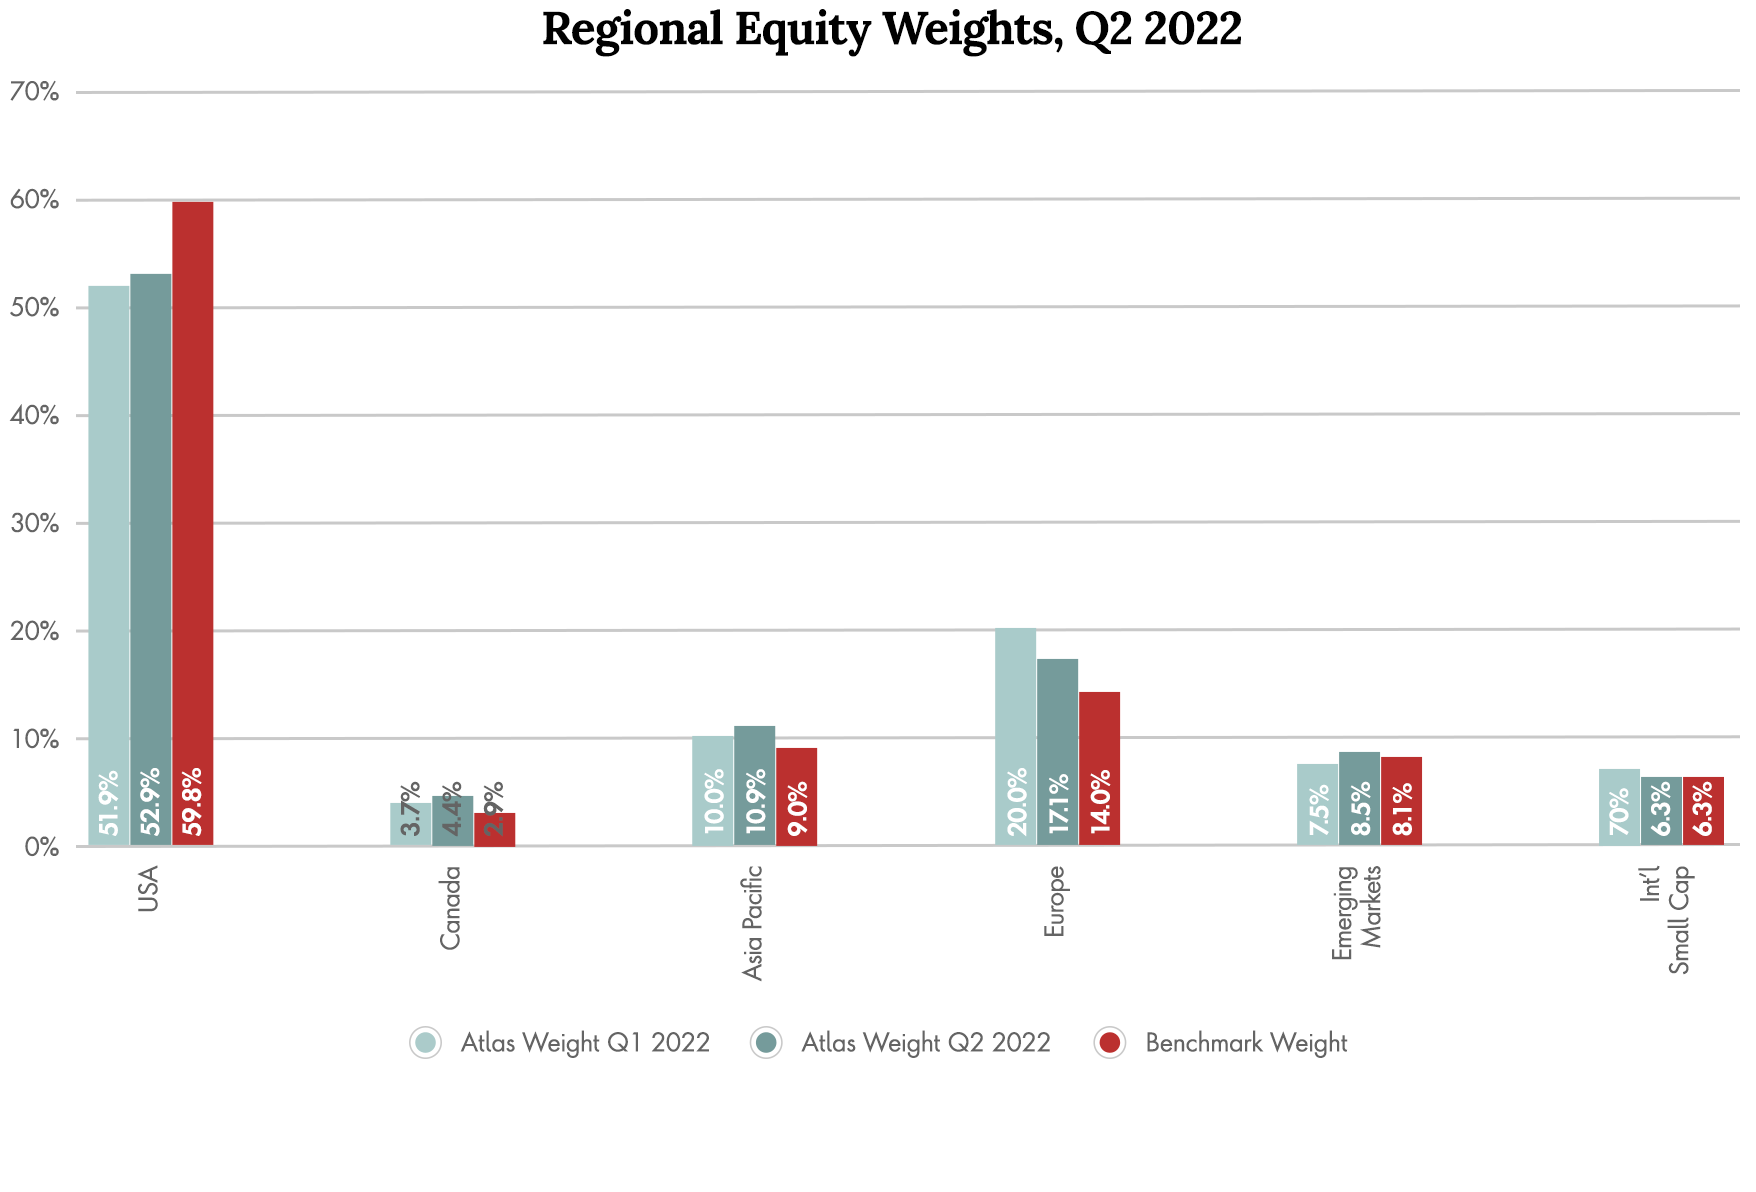 Regional Equity Werights Q2 2022